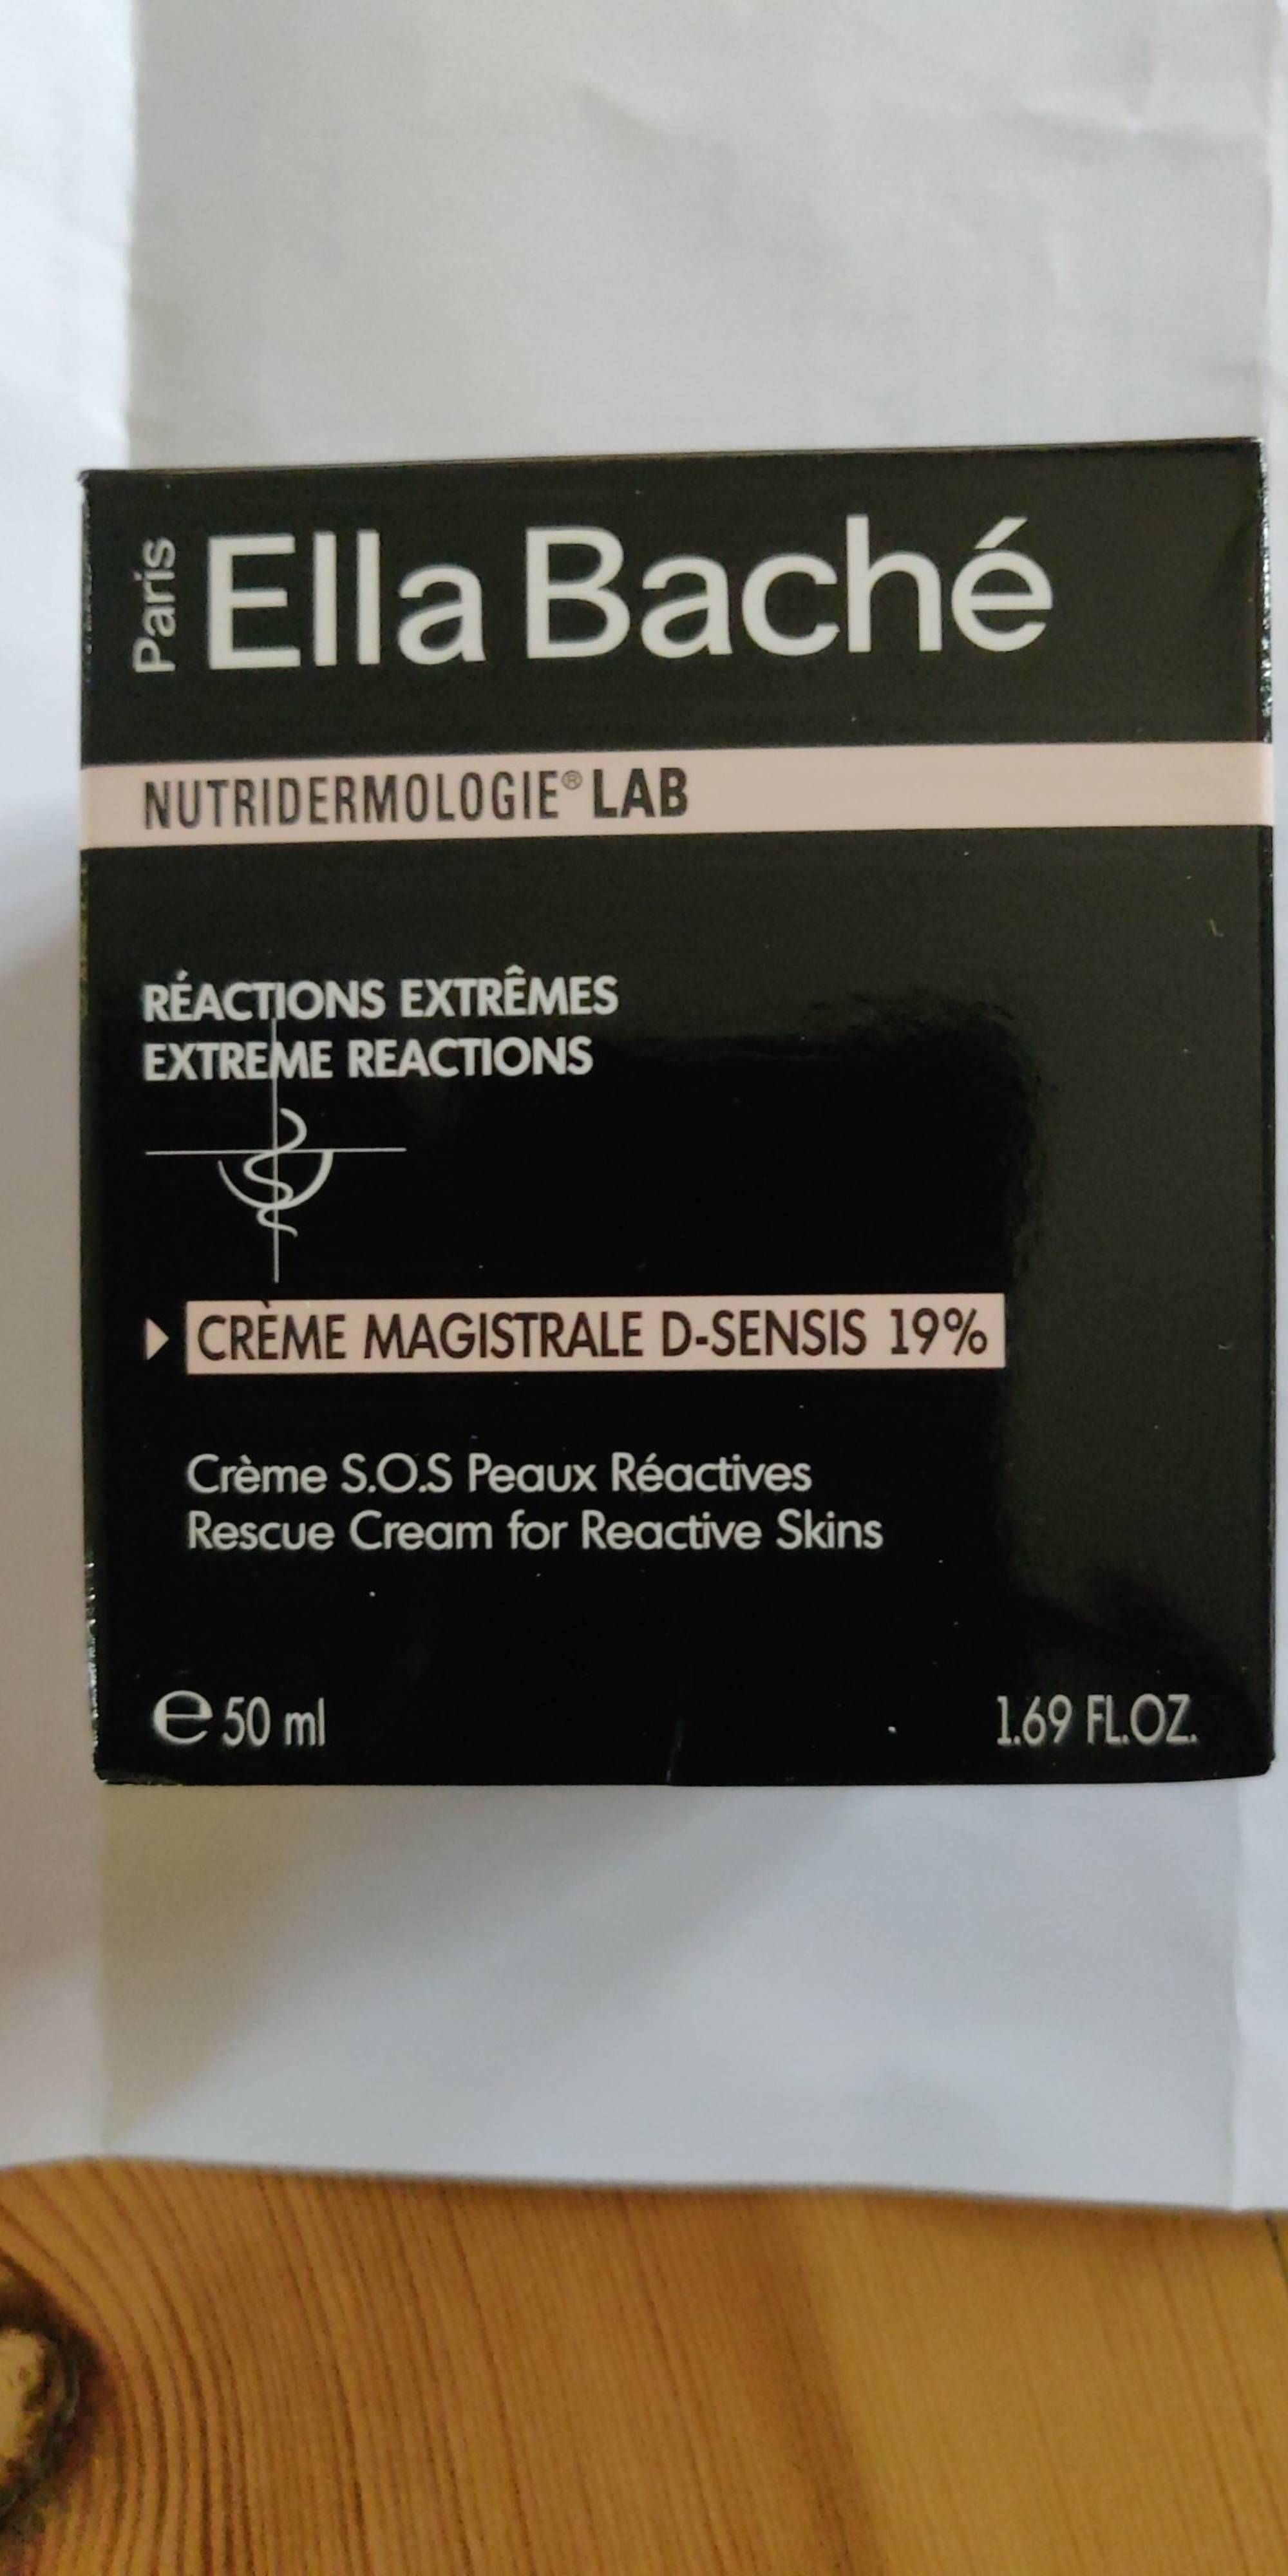 ELLA BACHE - Crème magistrale D-Sensis 19%